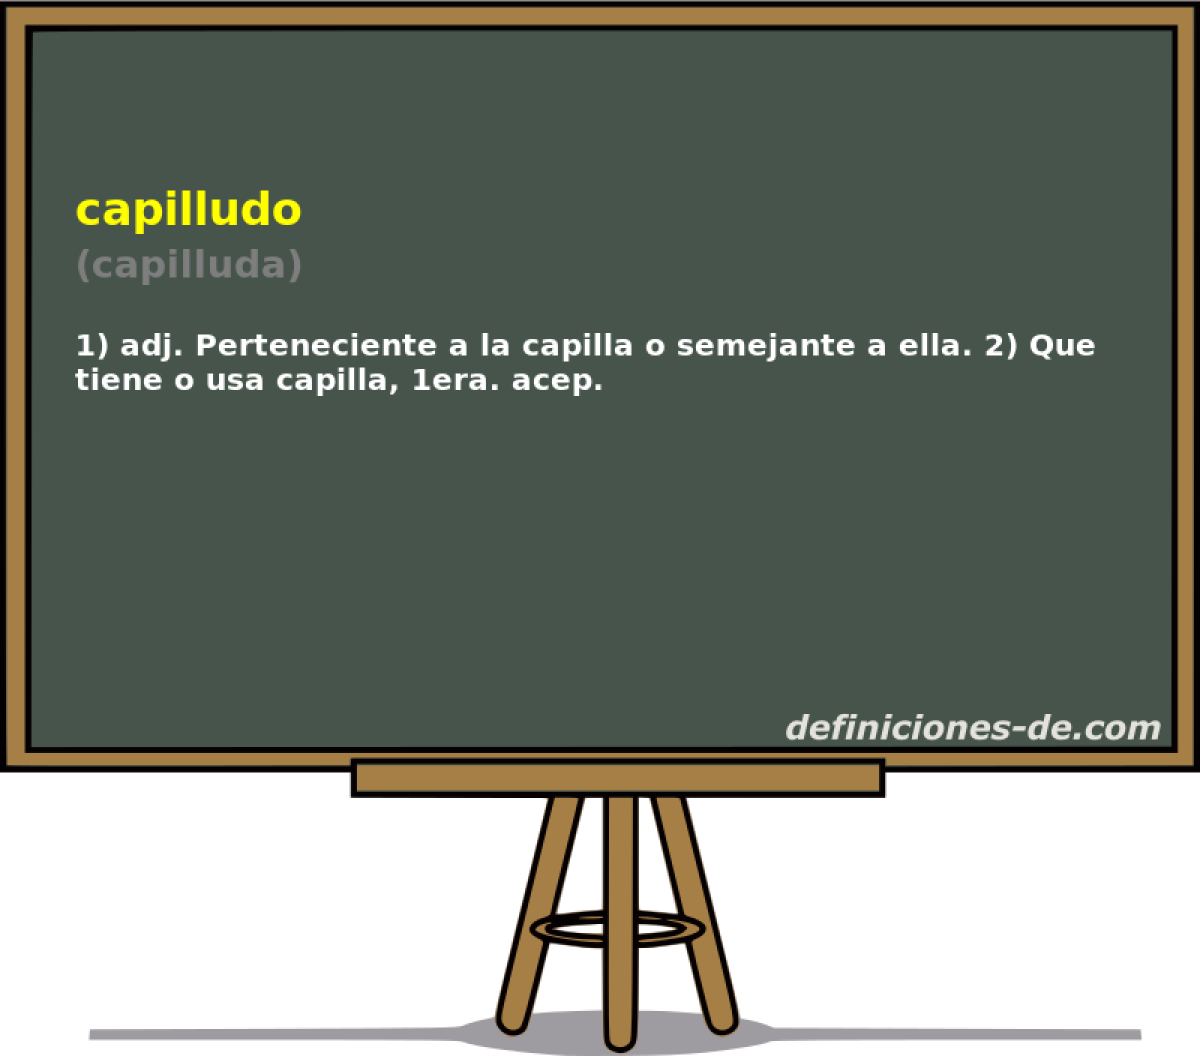 capilludo (capilluda)